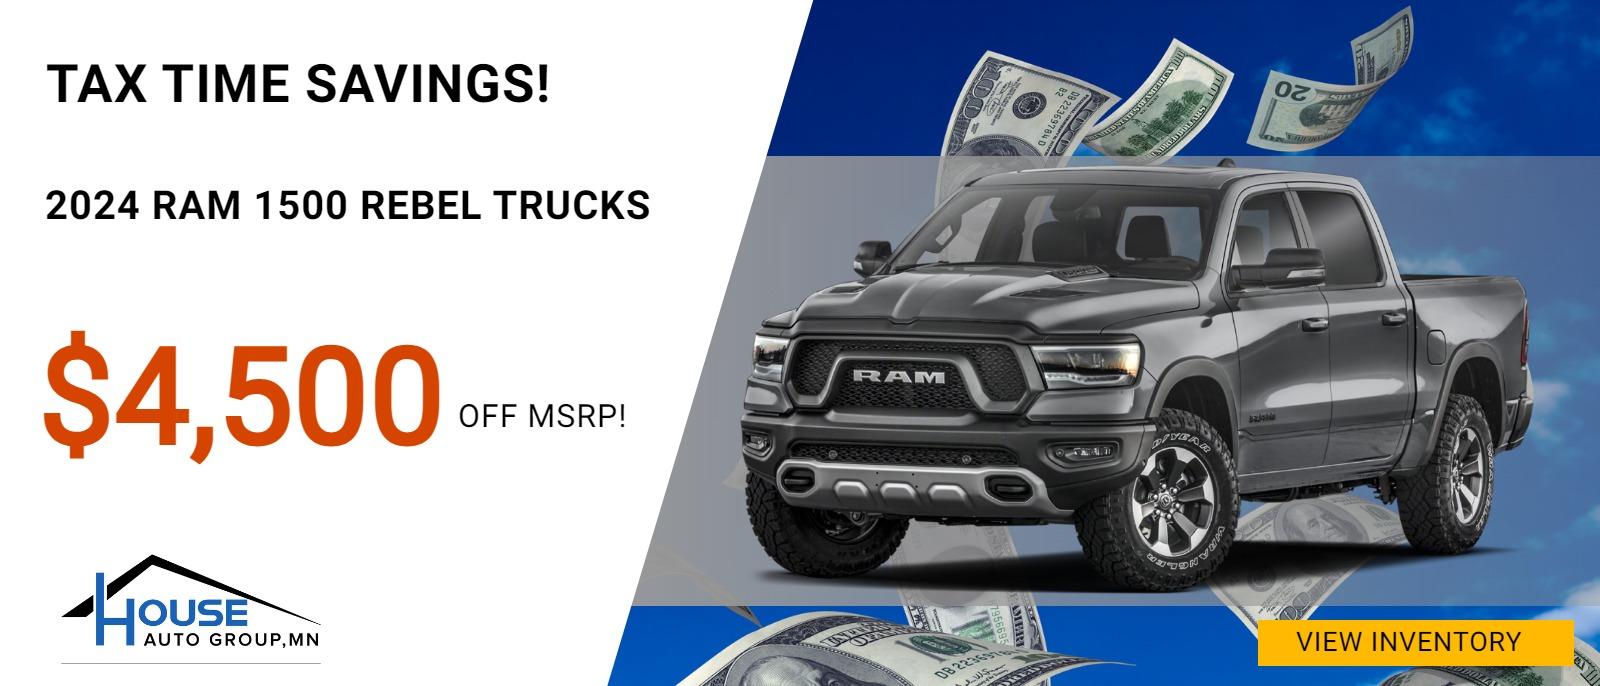 TAX TIME SAVINGS!
 2024 Ram 1500 Rebel Trucks - $4,500 Off MSRP!